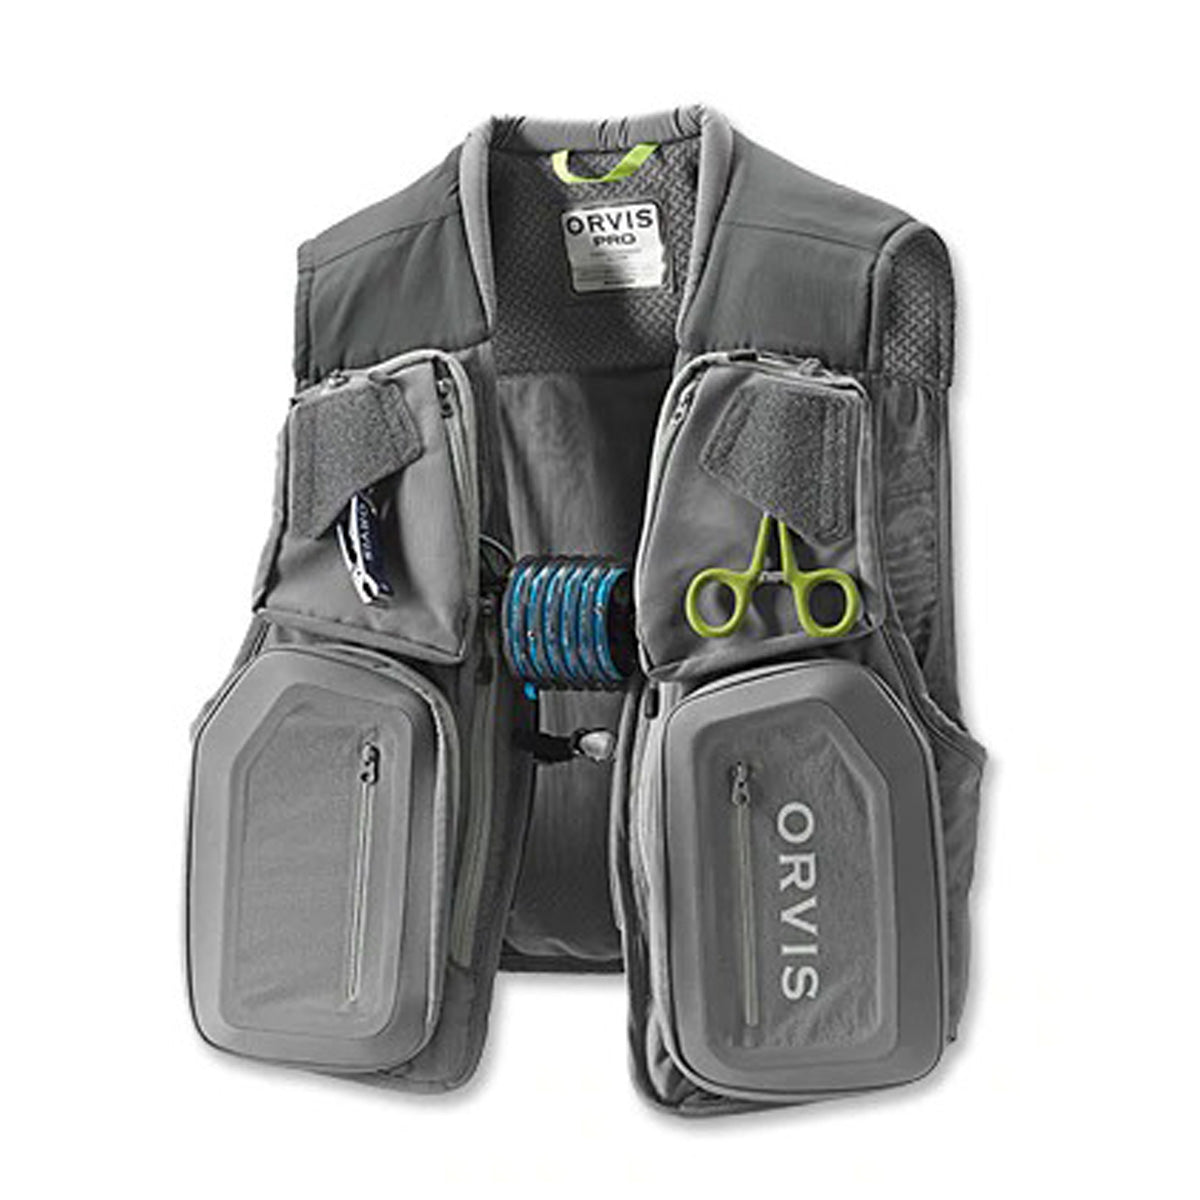 Orvis Pro Fishing Vest